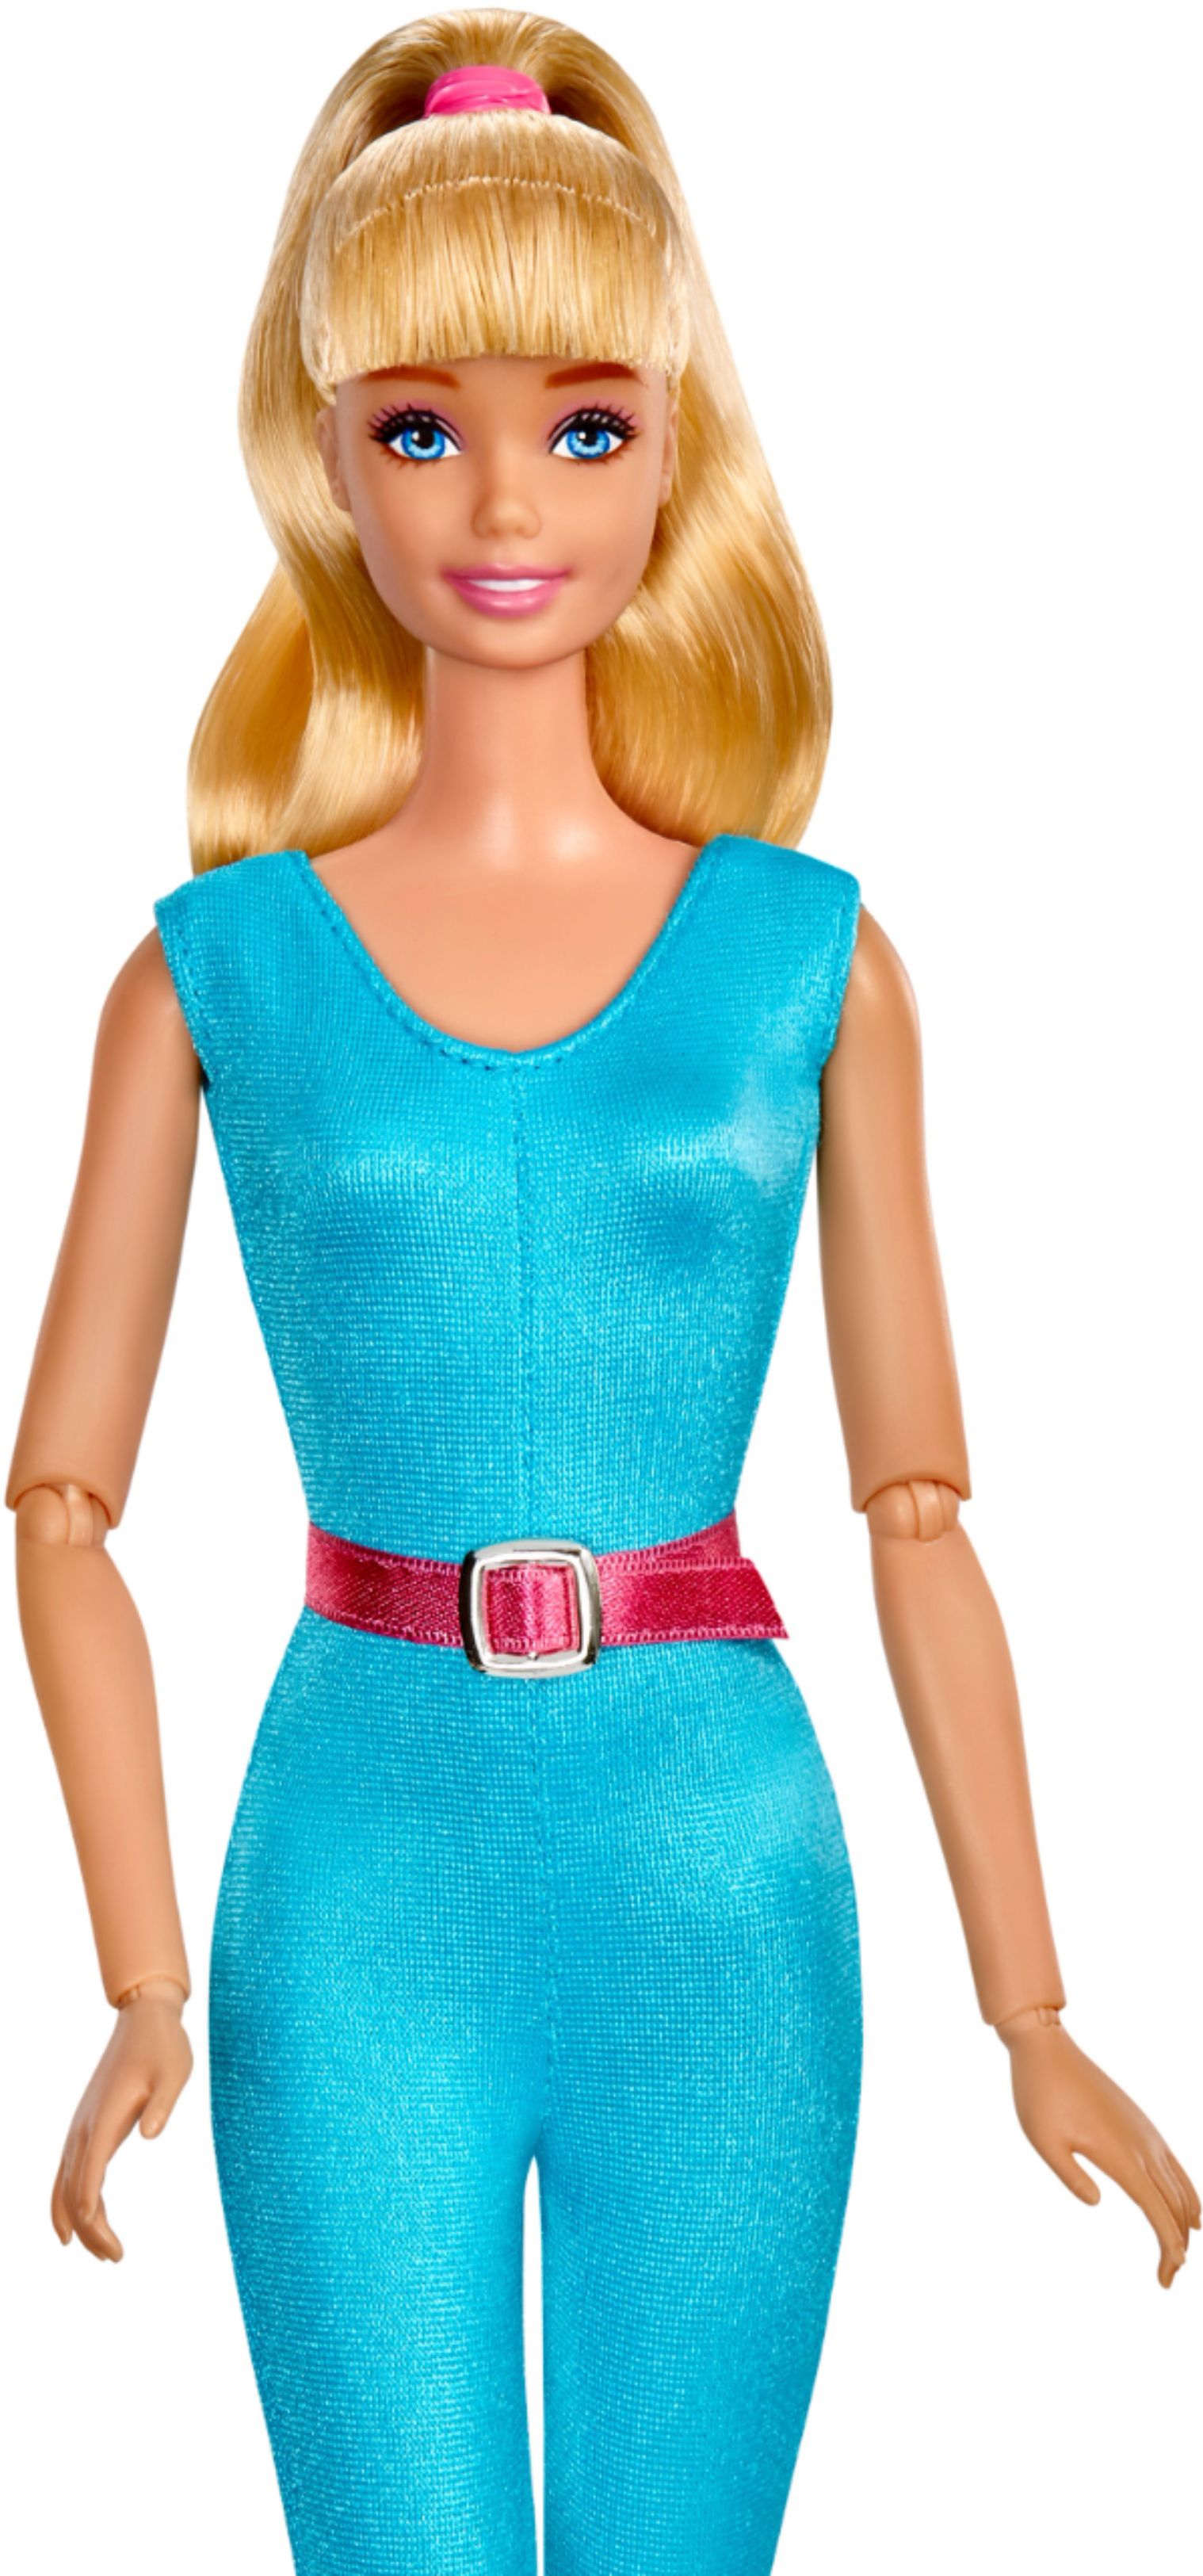 Best Buy: Toy Story 4 Barbie 11.5